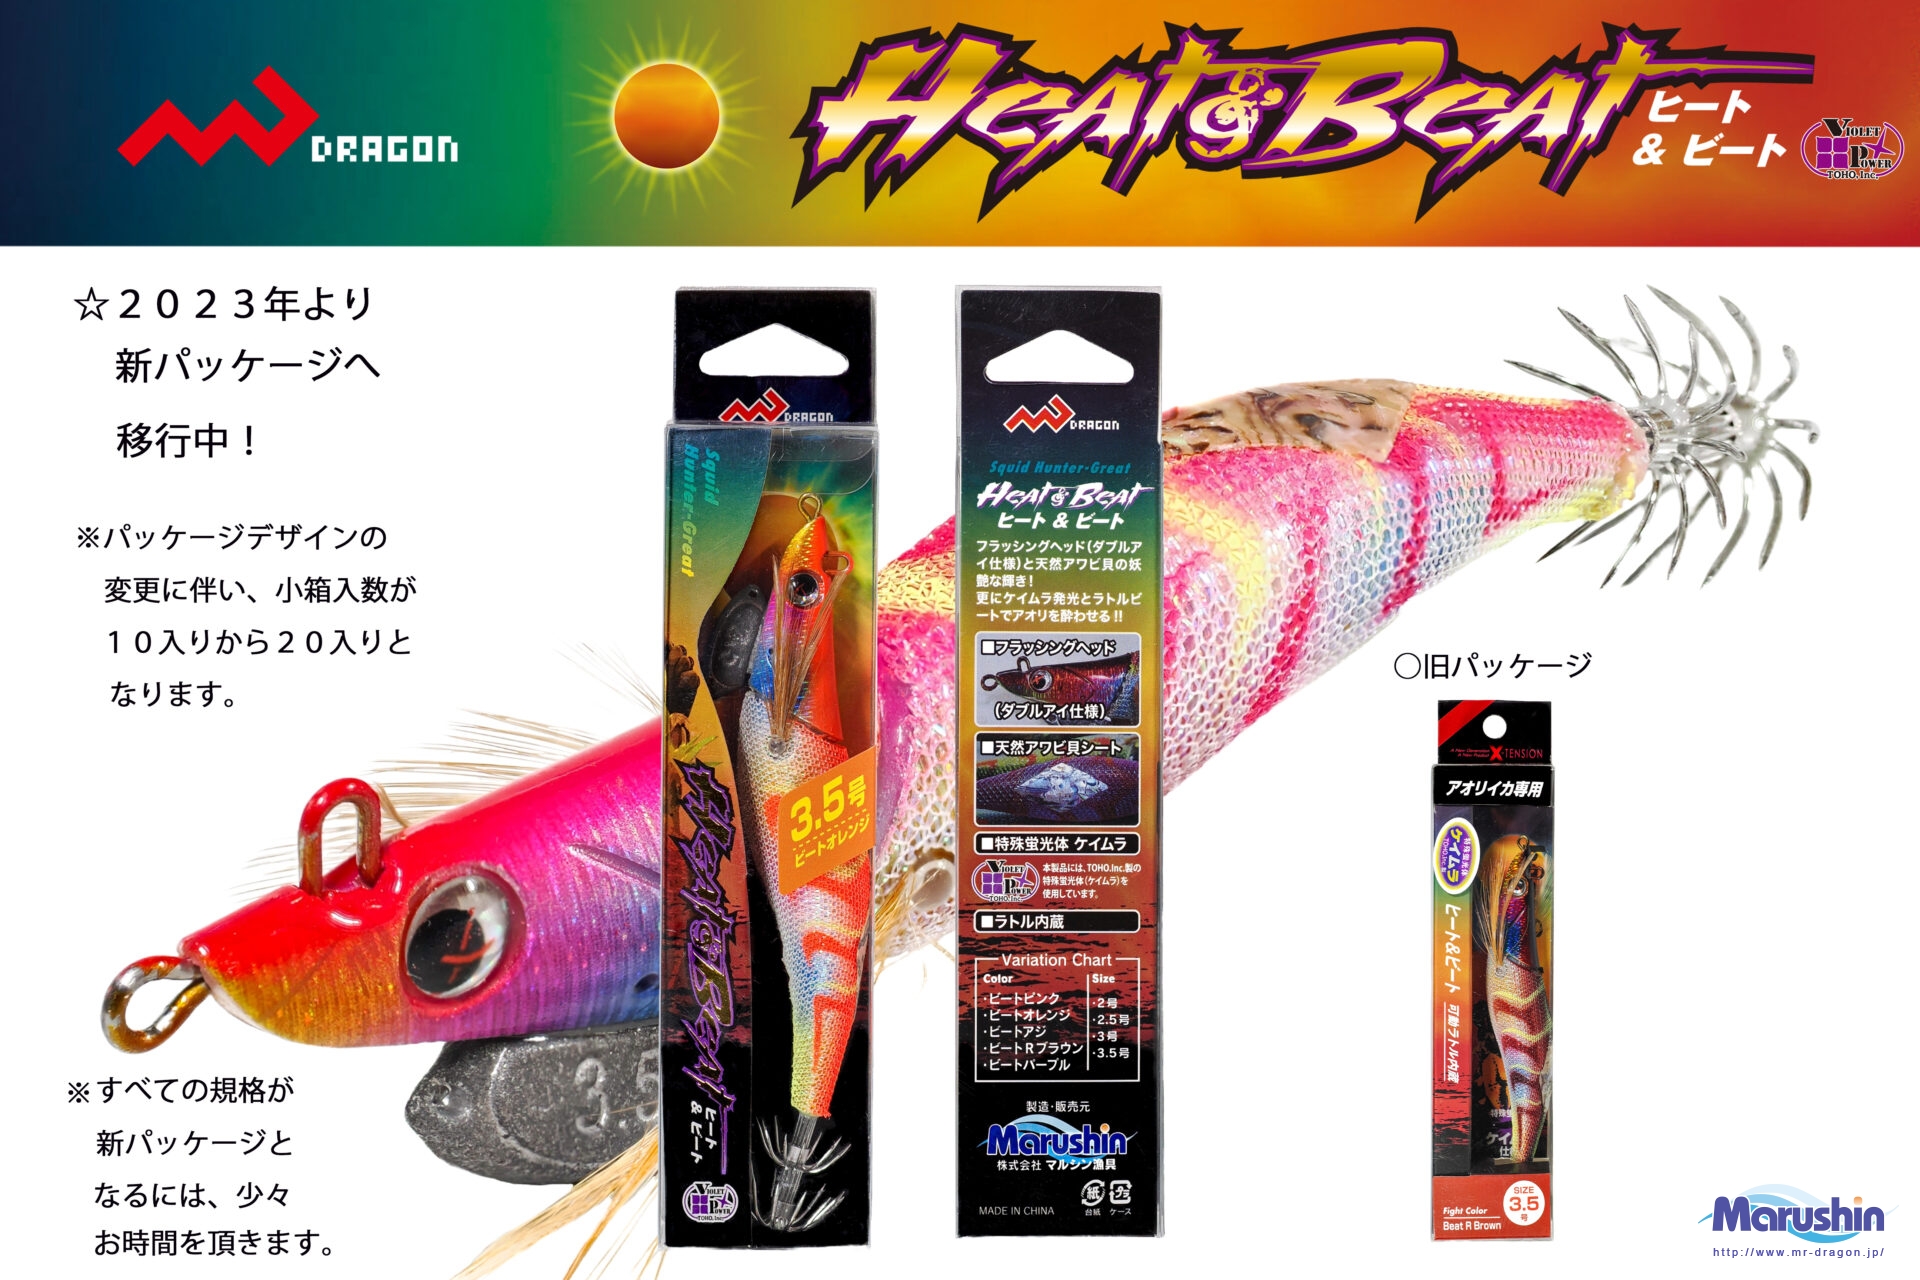 HEAT&BEAT / ヒートアンドビート 2号～3.5号 全5色イメージ画像